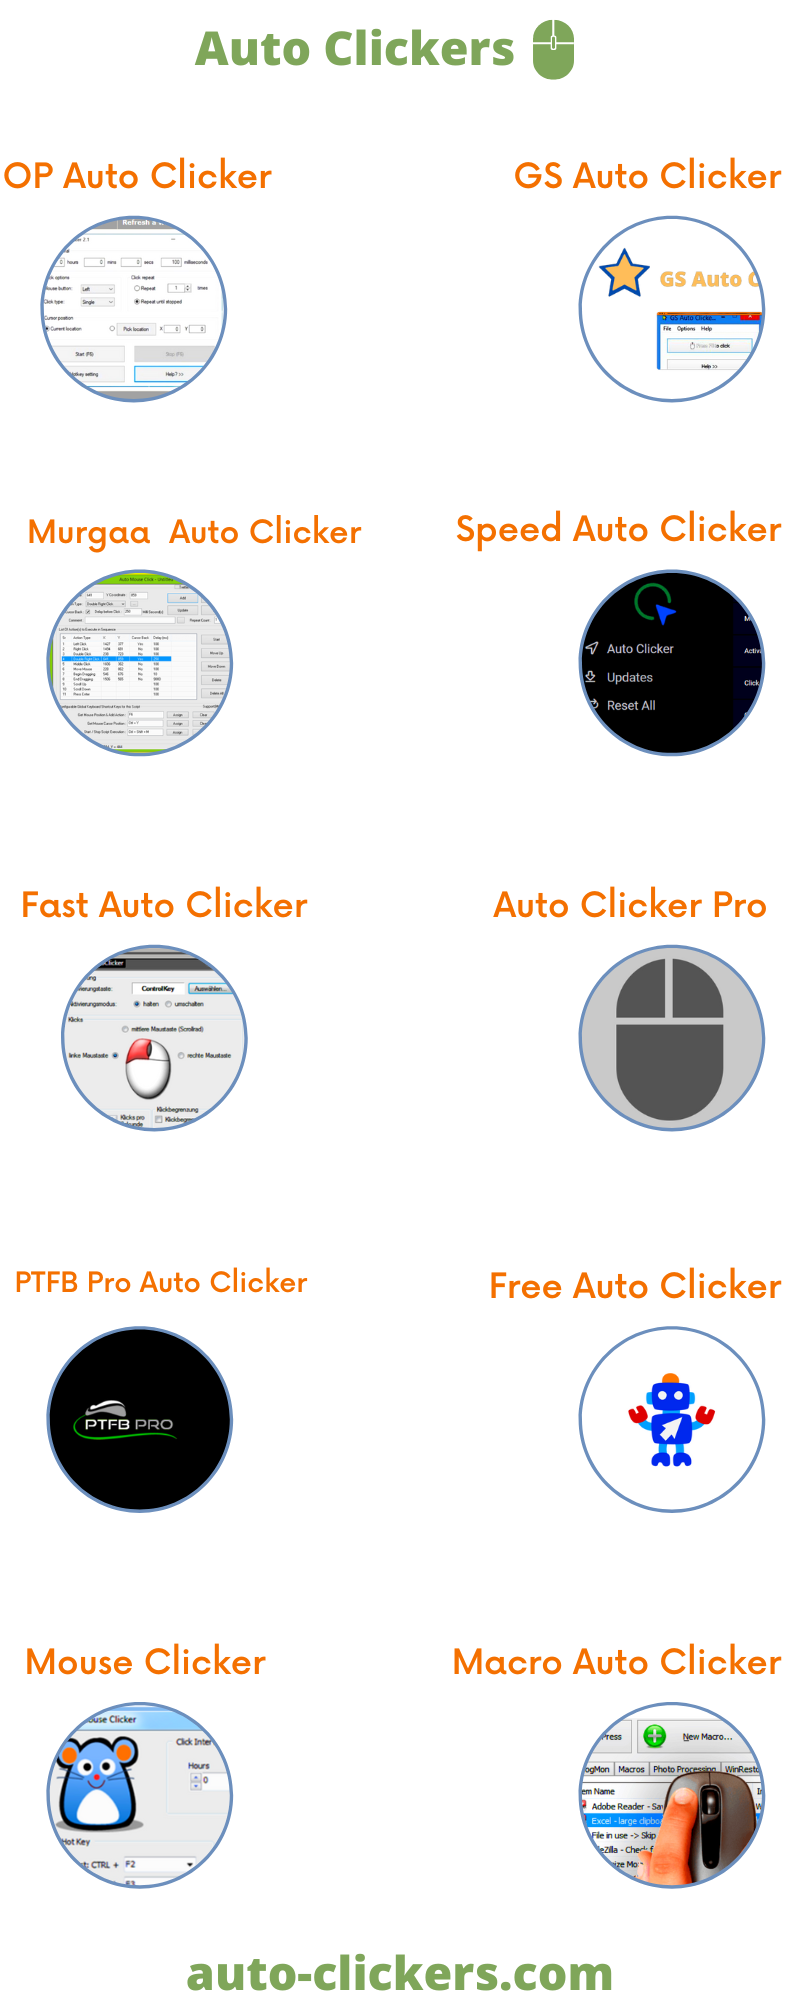 Auto Clickers Infographic